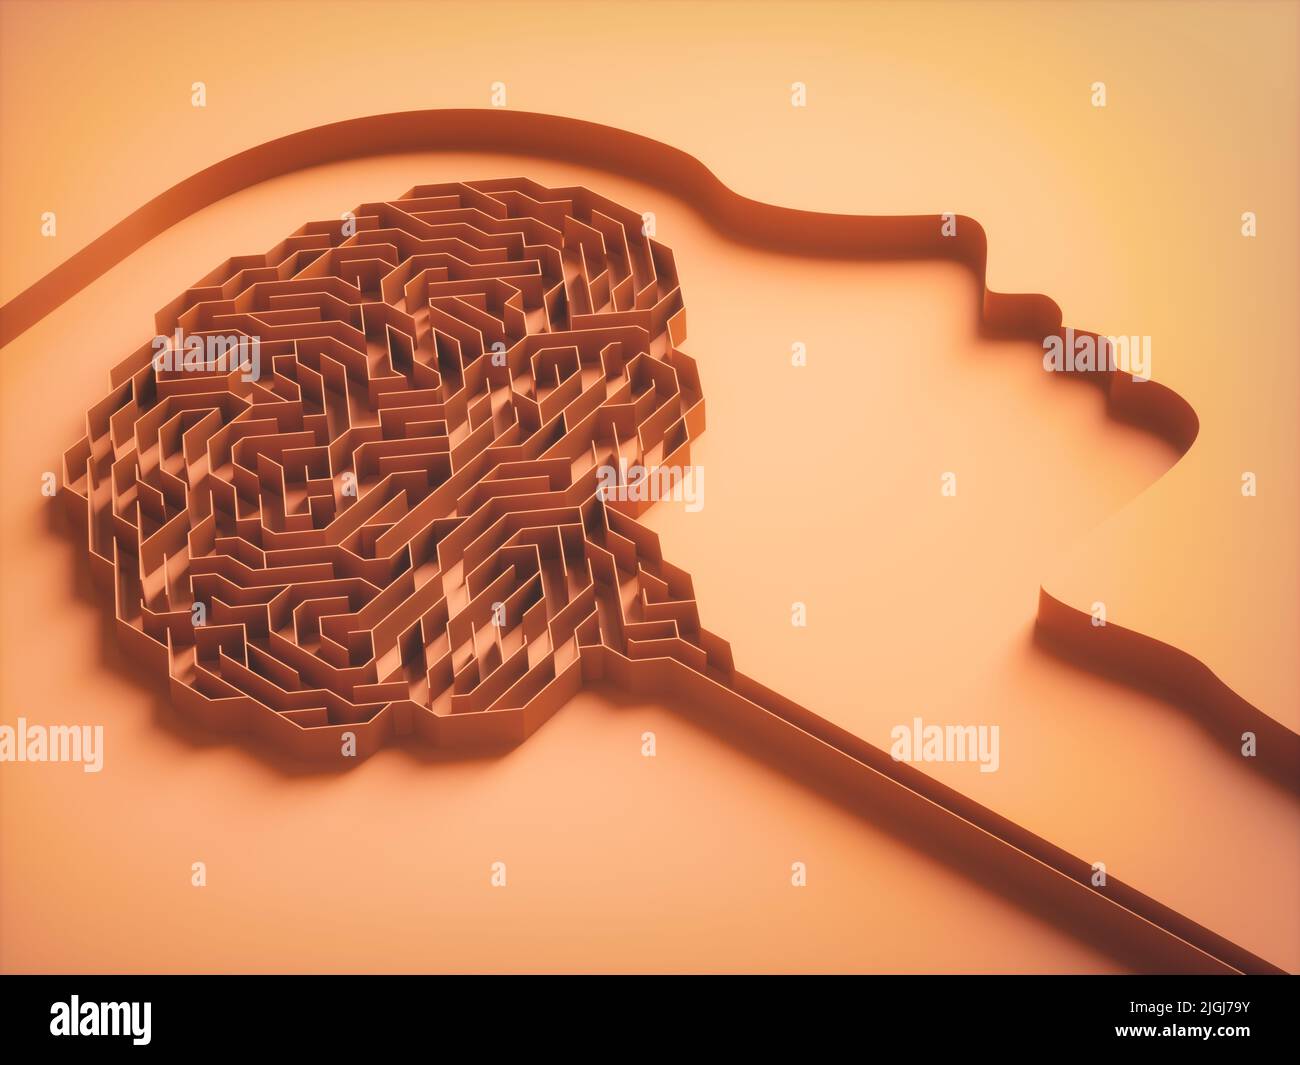 3D illustration, brain shaped maze. Concept image of study and brain behavior. Stock Photo